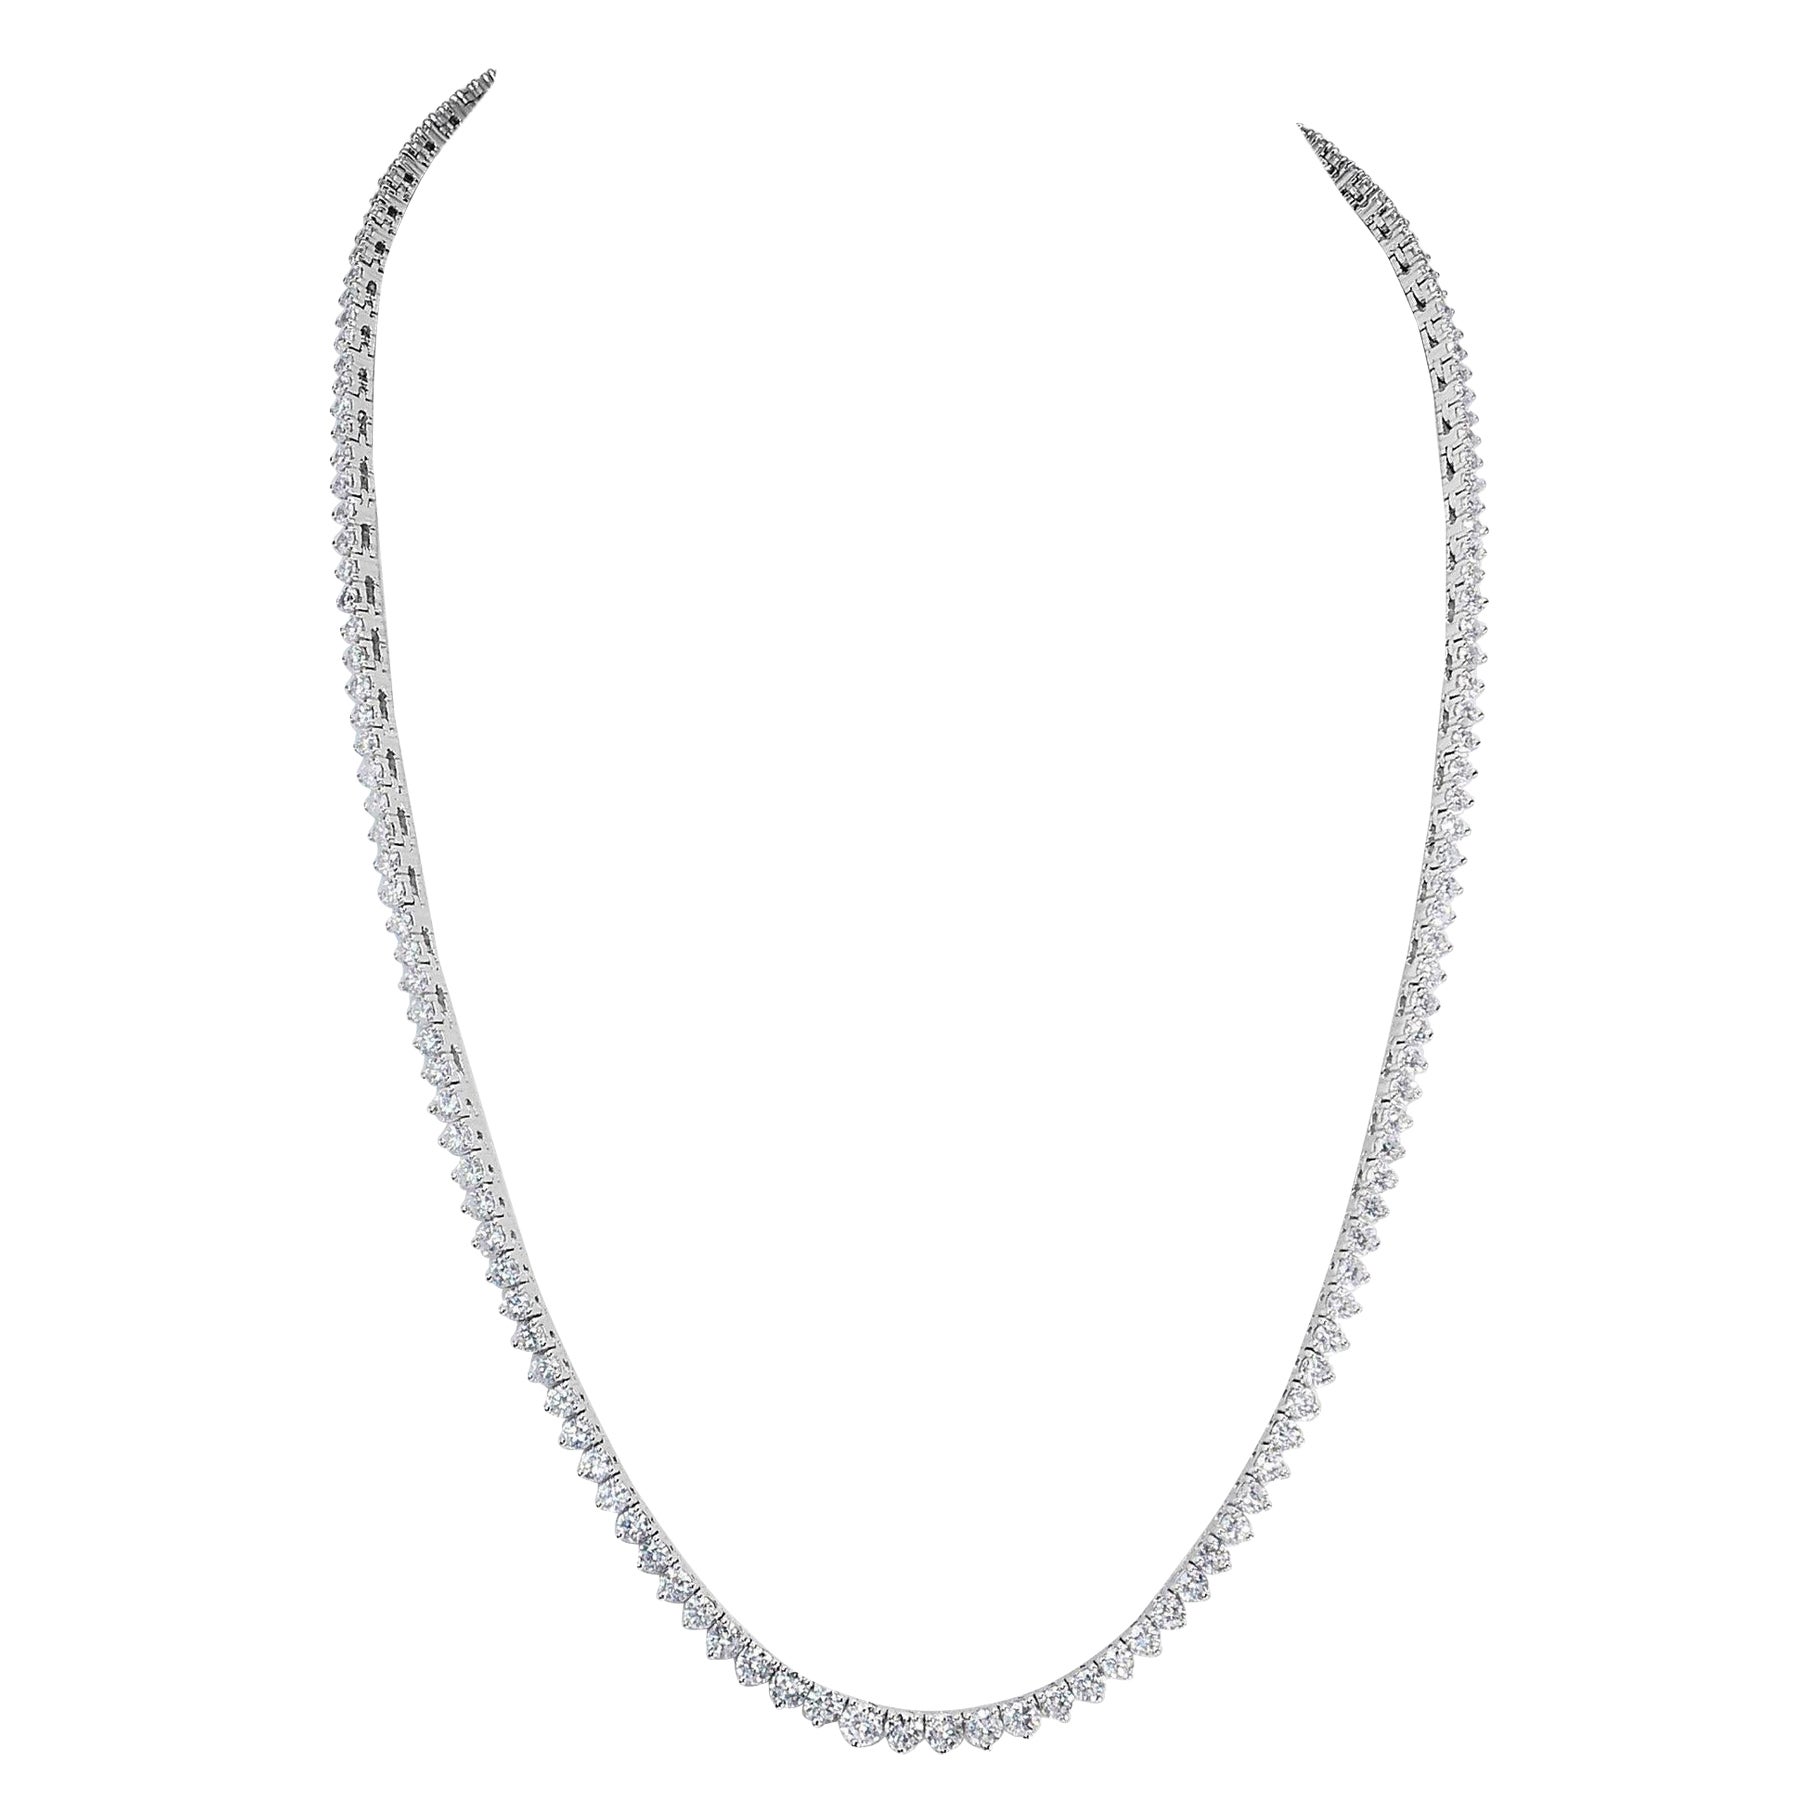 Ravishing 14k White Gold Necklace w/ 8.36 ct Natural Diamonds IGI Certificate For Sale